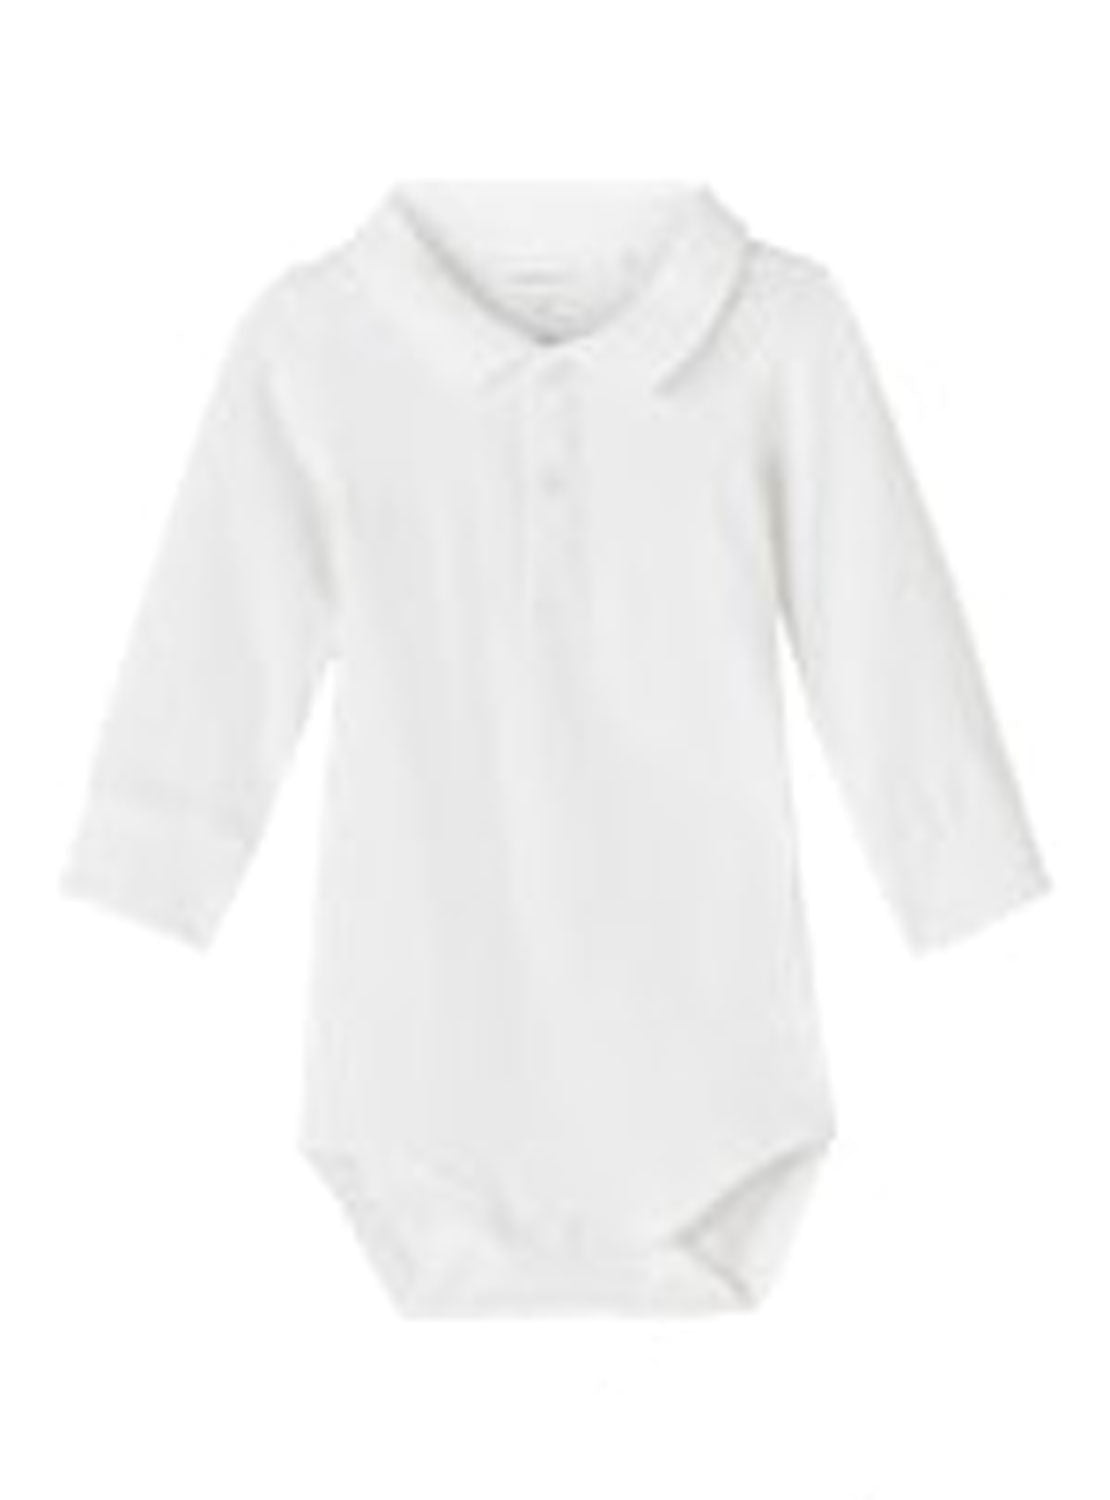 Name It Baby Boy Long Sleeve Bodysuit - White 1 Shaws Department Stores